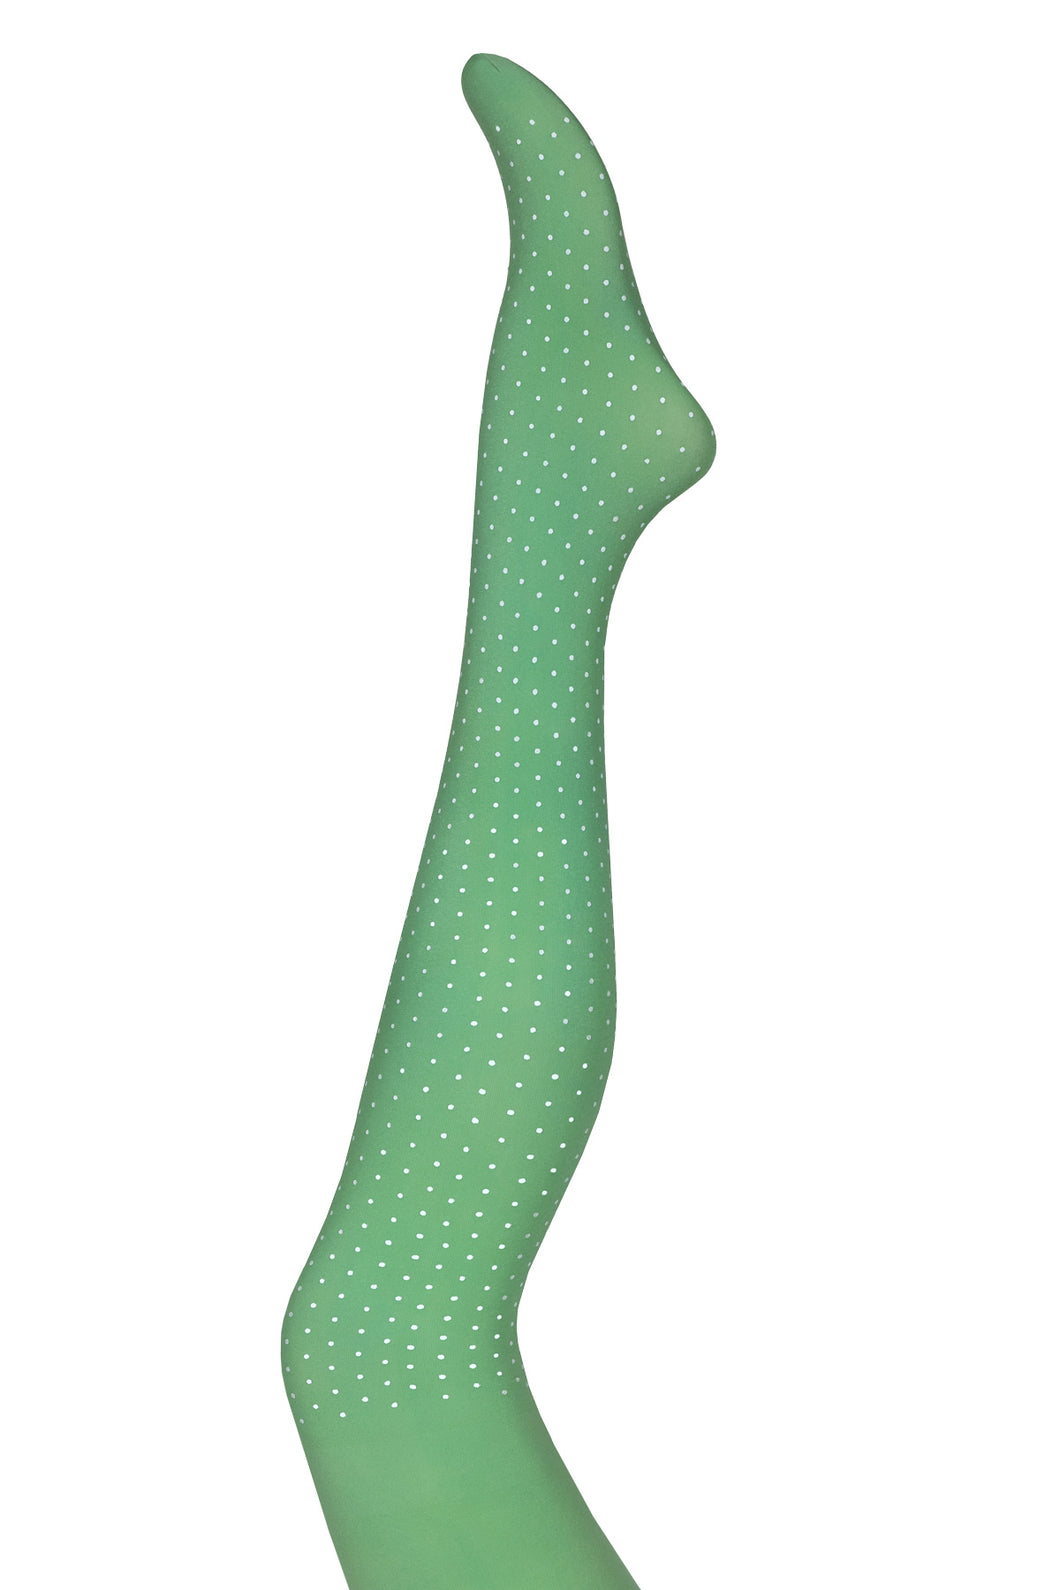 Verdens beste og kuleste strømpebukse i kraftig grønn prikket spandex kvalitet one size 